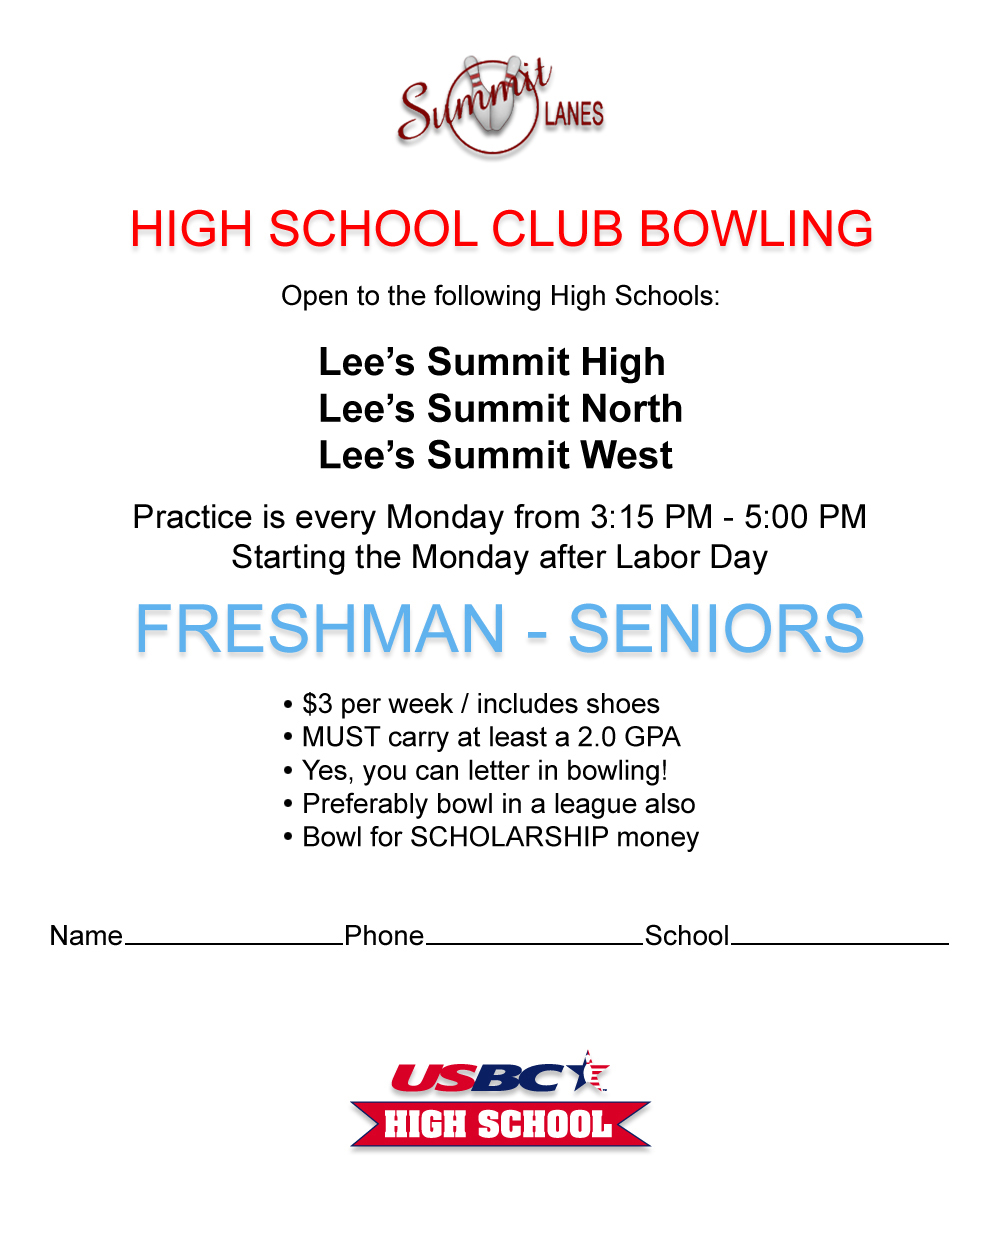 High School Bowling Club | Leagues | Summit Lanes | Lee's Summit, MO